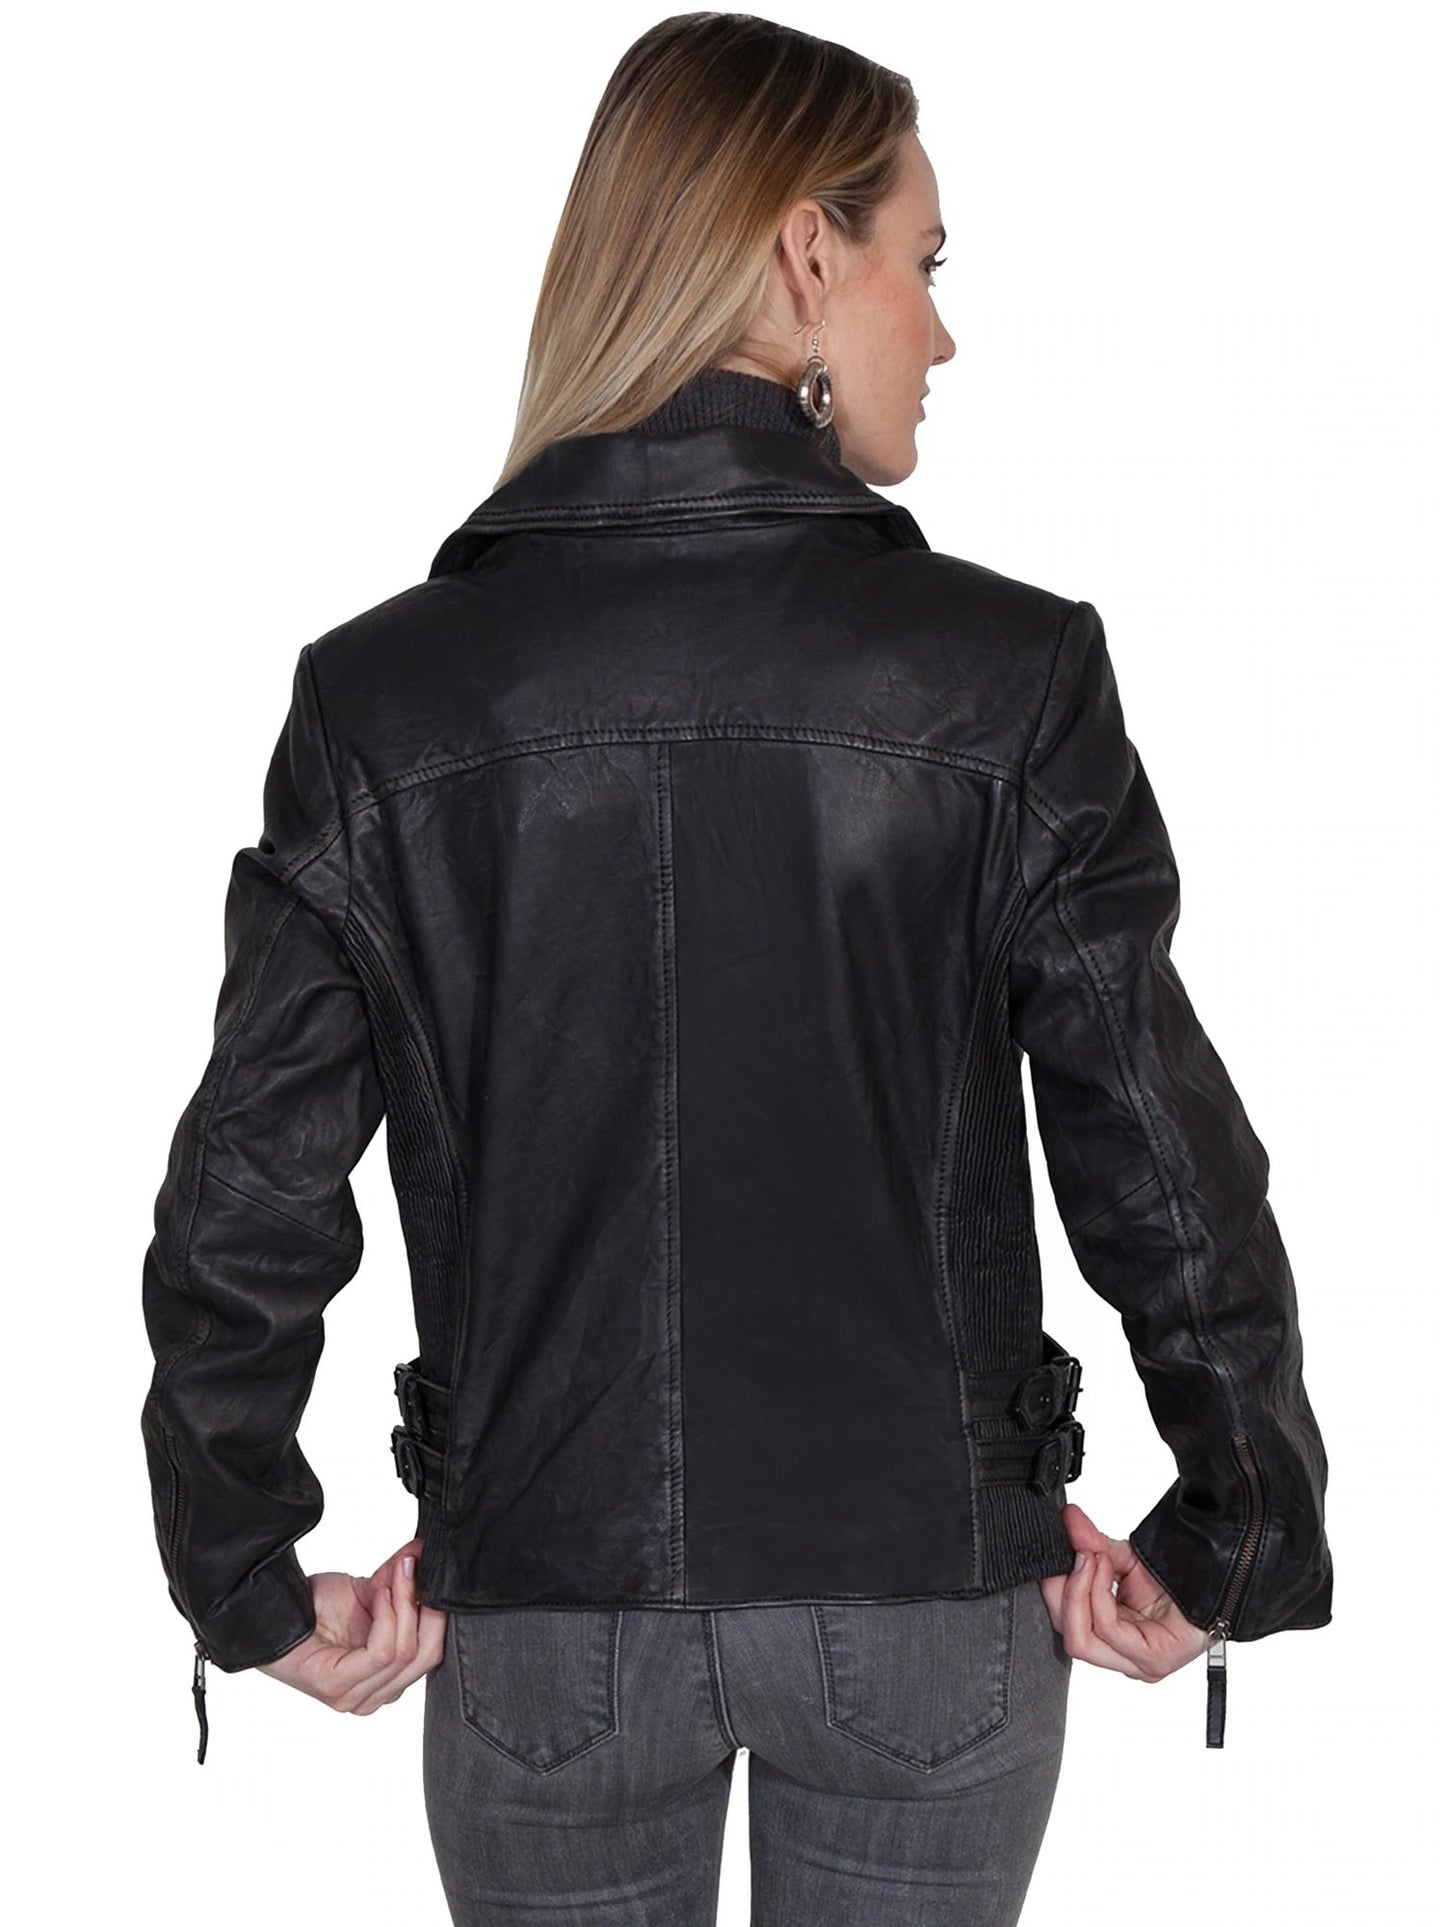 Womens Black Leather Motorcycle Jacket